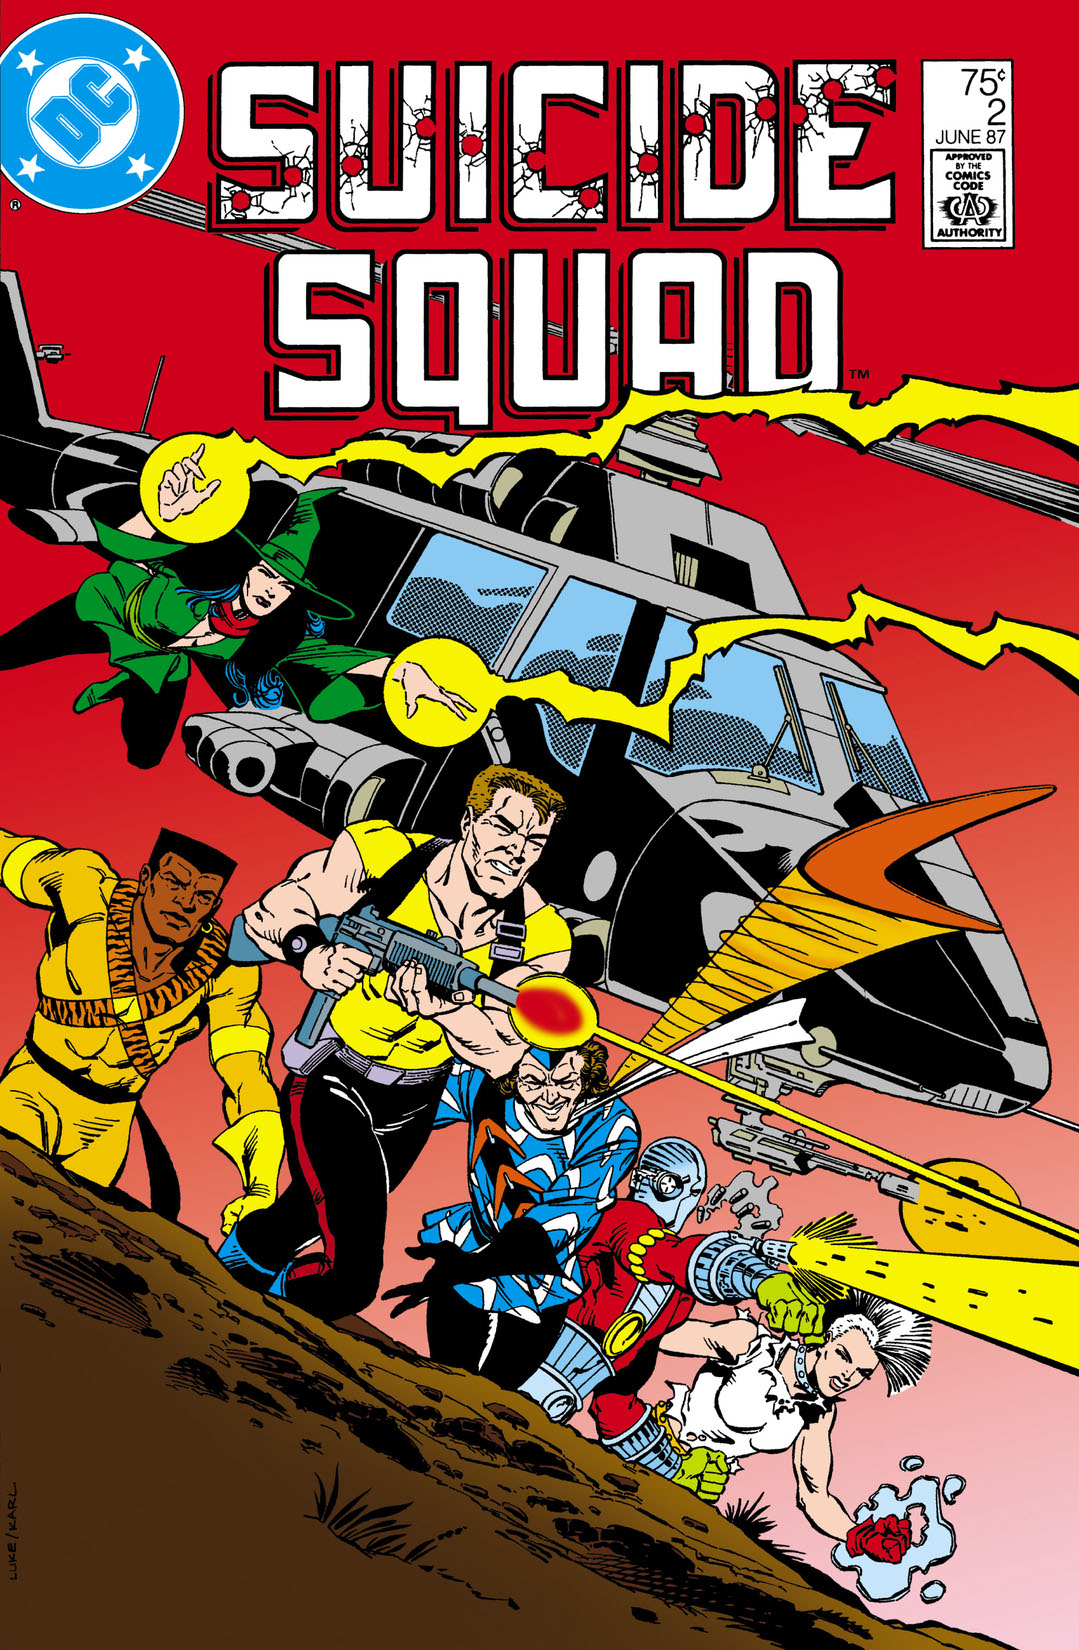 Suicide Squad (1987-) #2 preview images